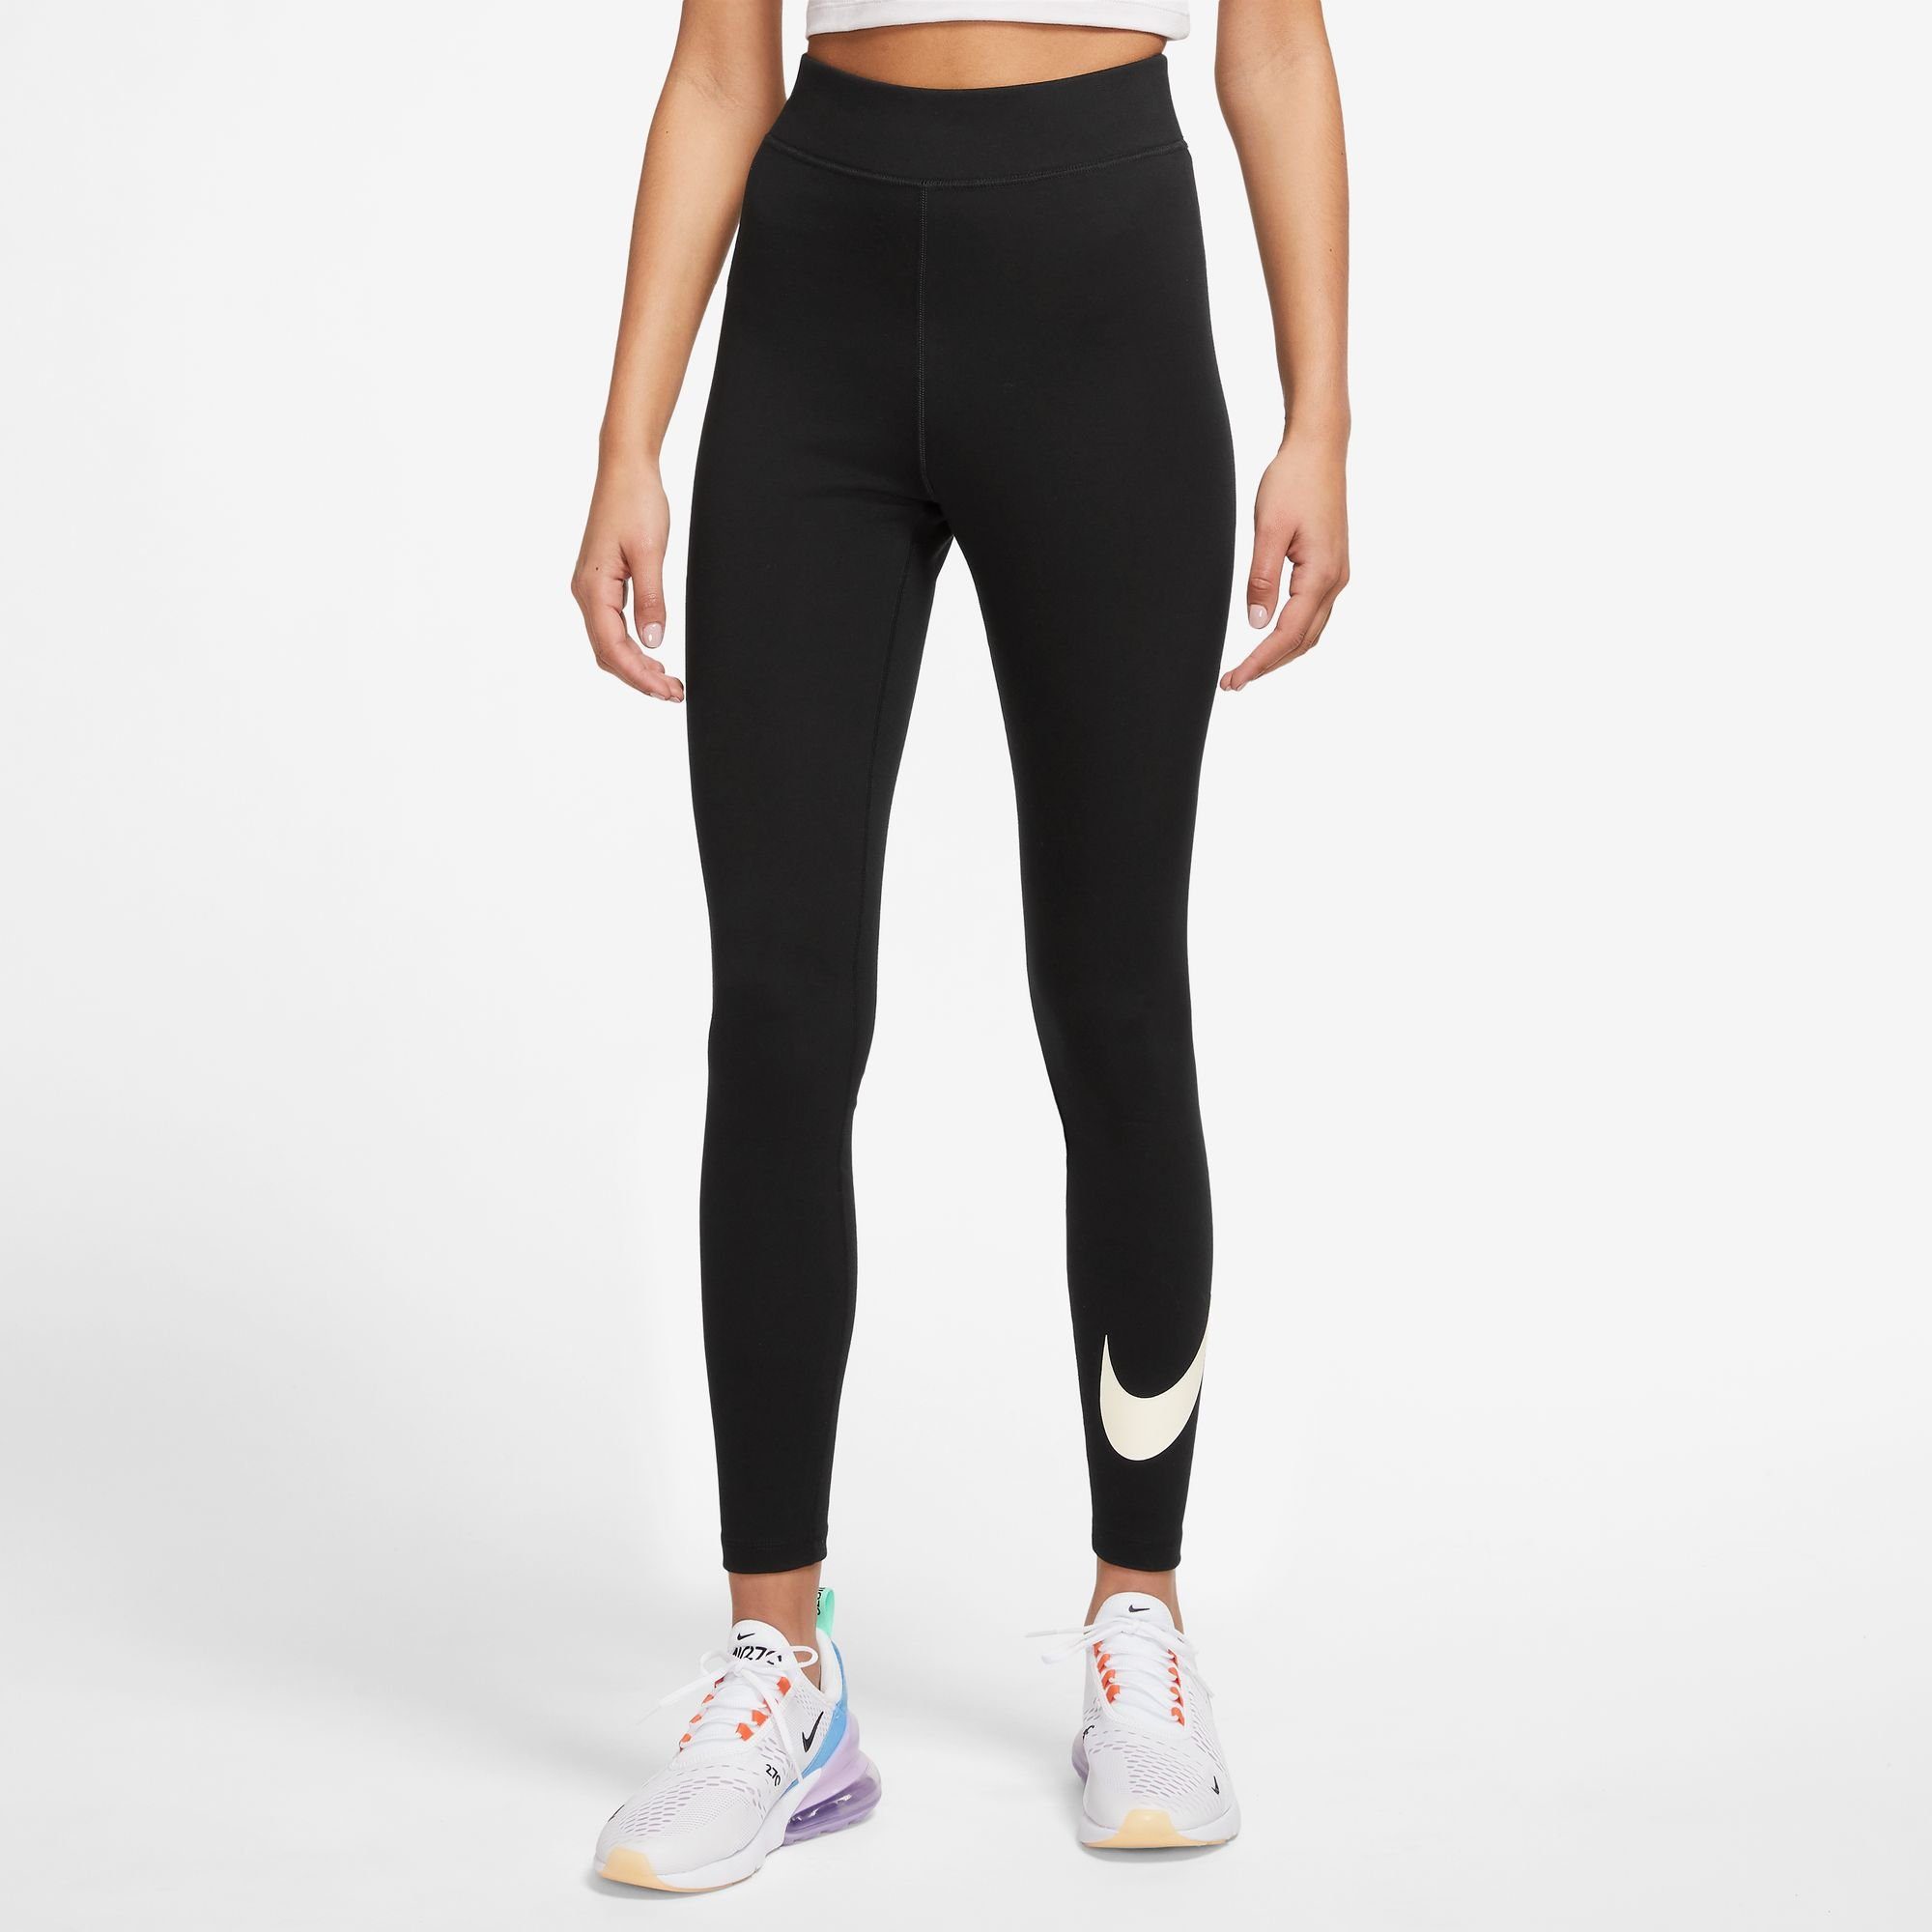 CLASSICS HIGH-WAISTED Sportswear WOMEN'S Leggings LEGGINGS BLACK/SAIL Nike GRAPHIC